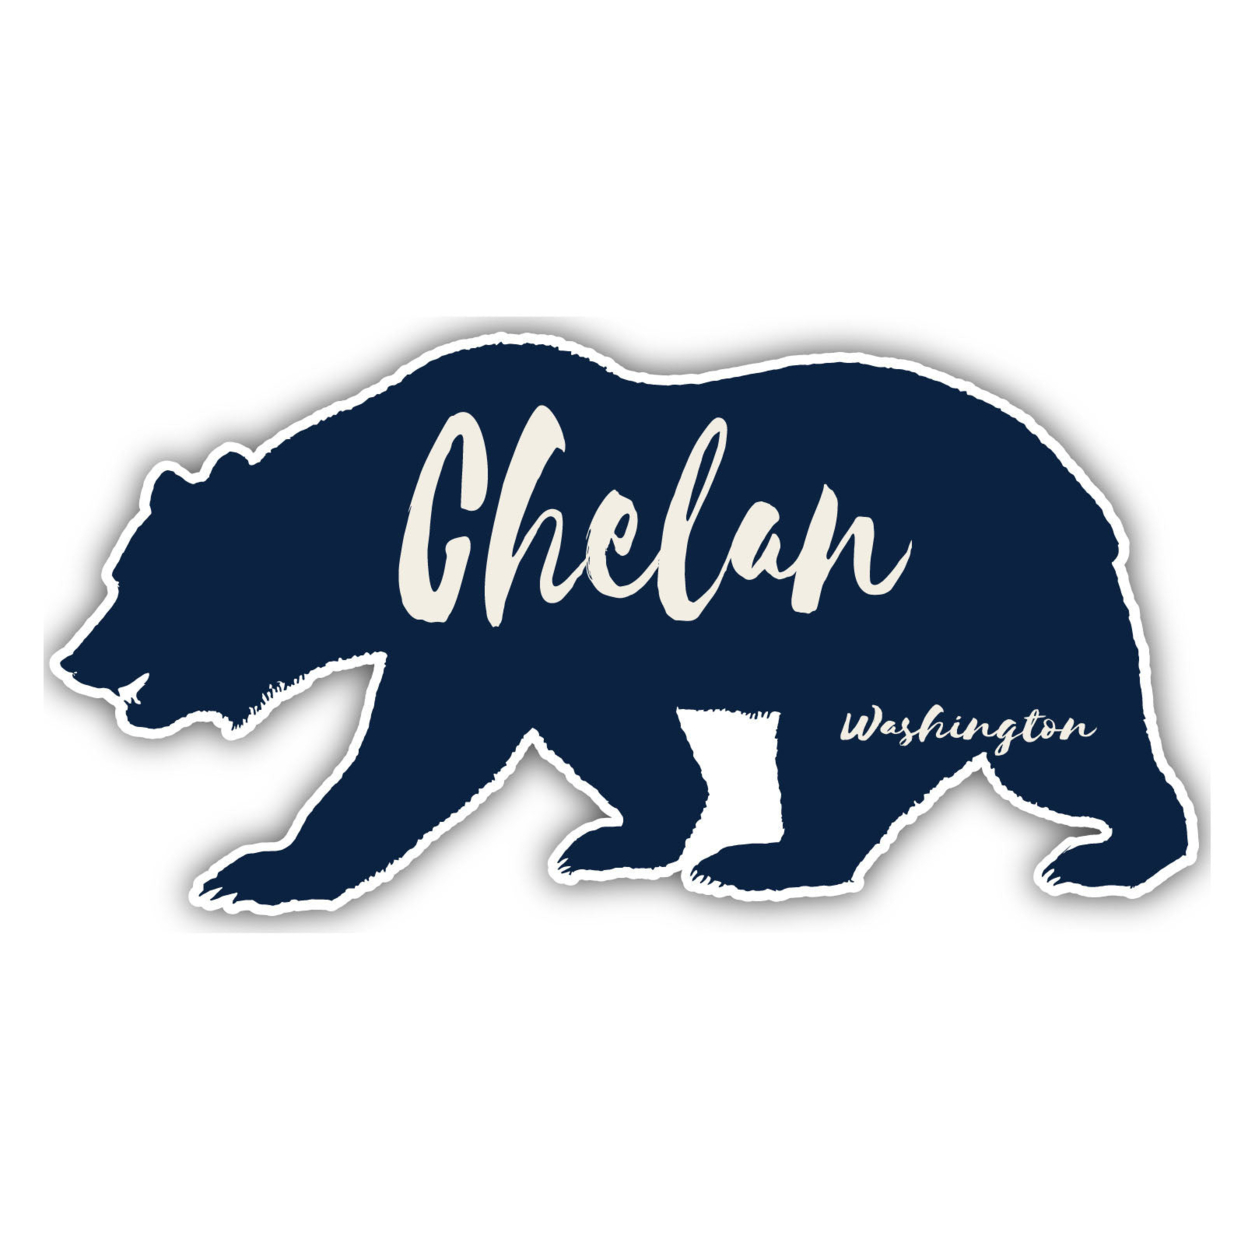 Chelan Washington Souvenir Decorative Stickers (Choose Theme And Size) - 4-Pack, 12-Inch, Tent